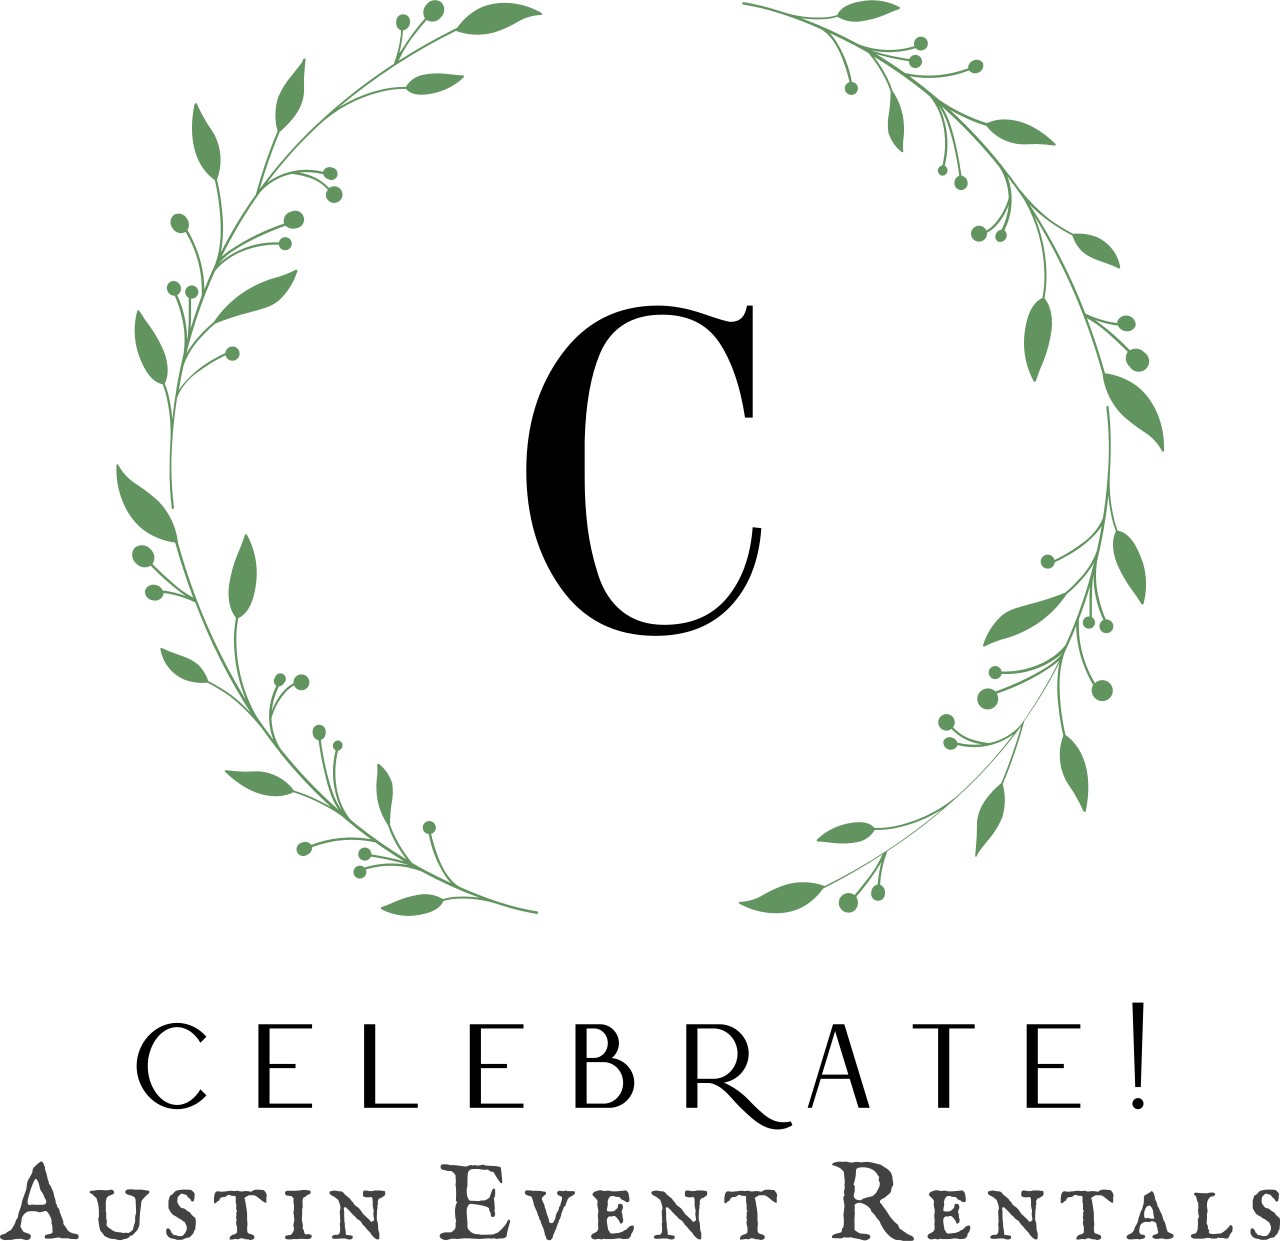 Celebrate! Austin Event Rentals's web page